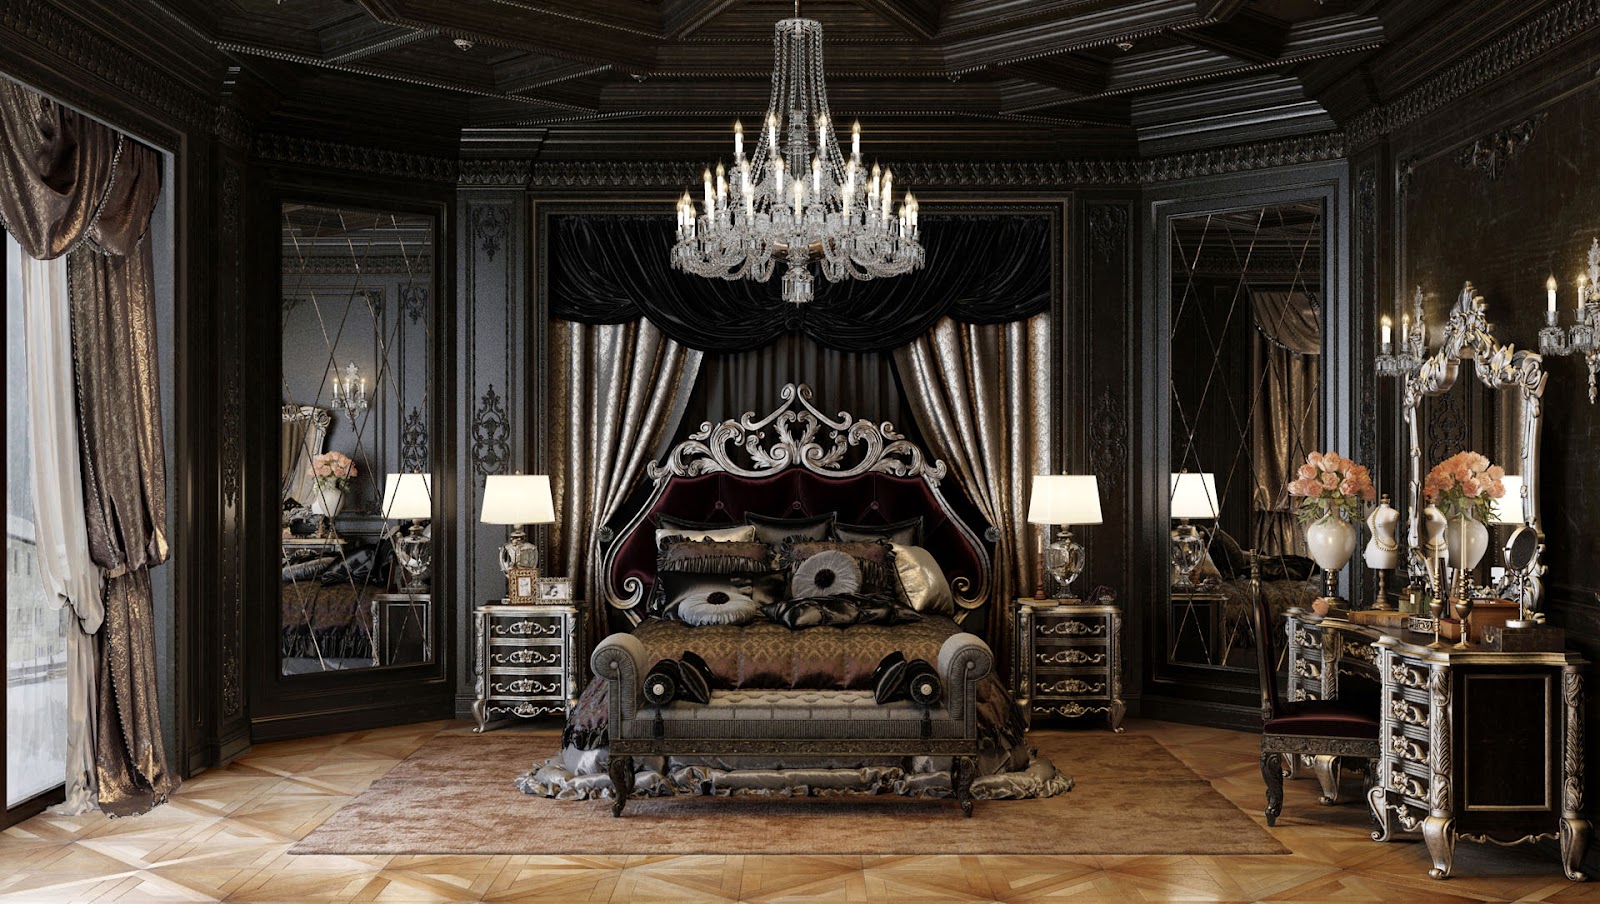 Royal Black bedroom ideas